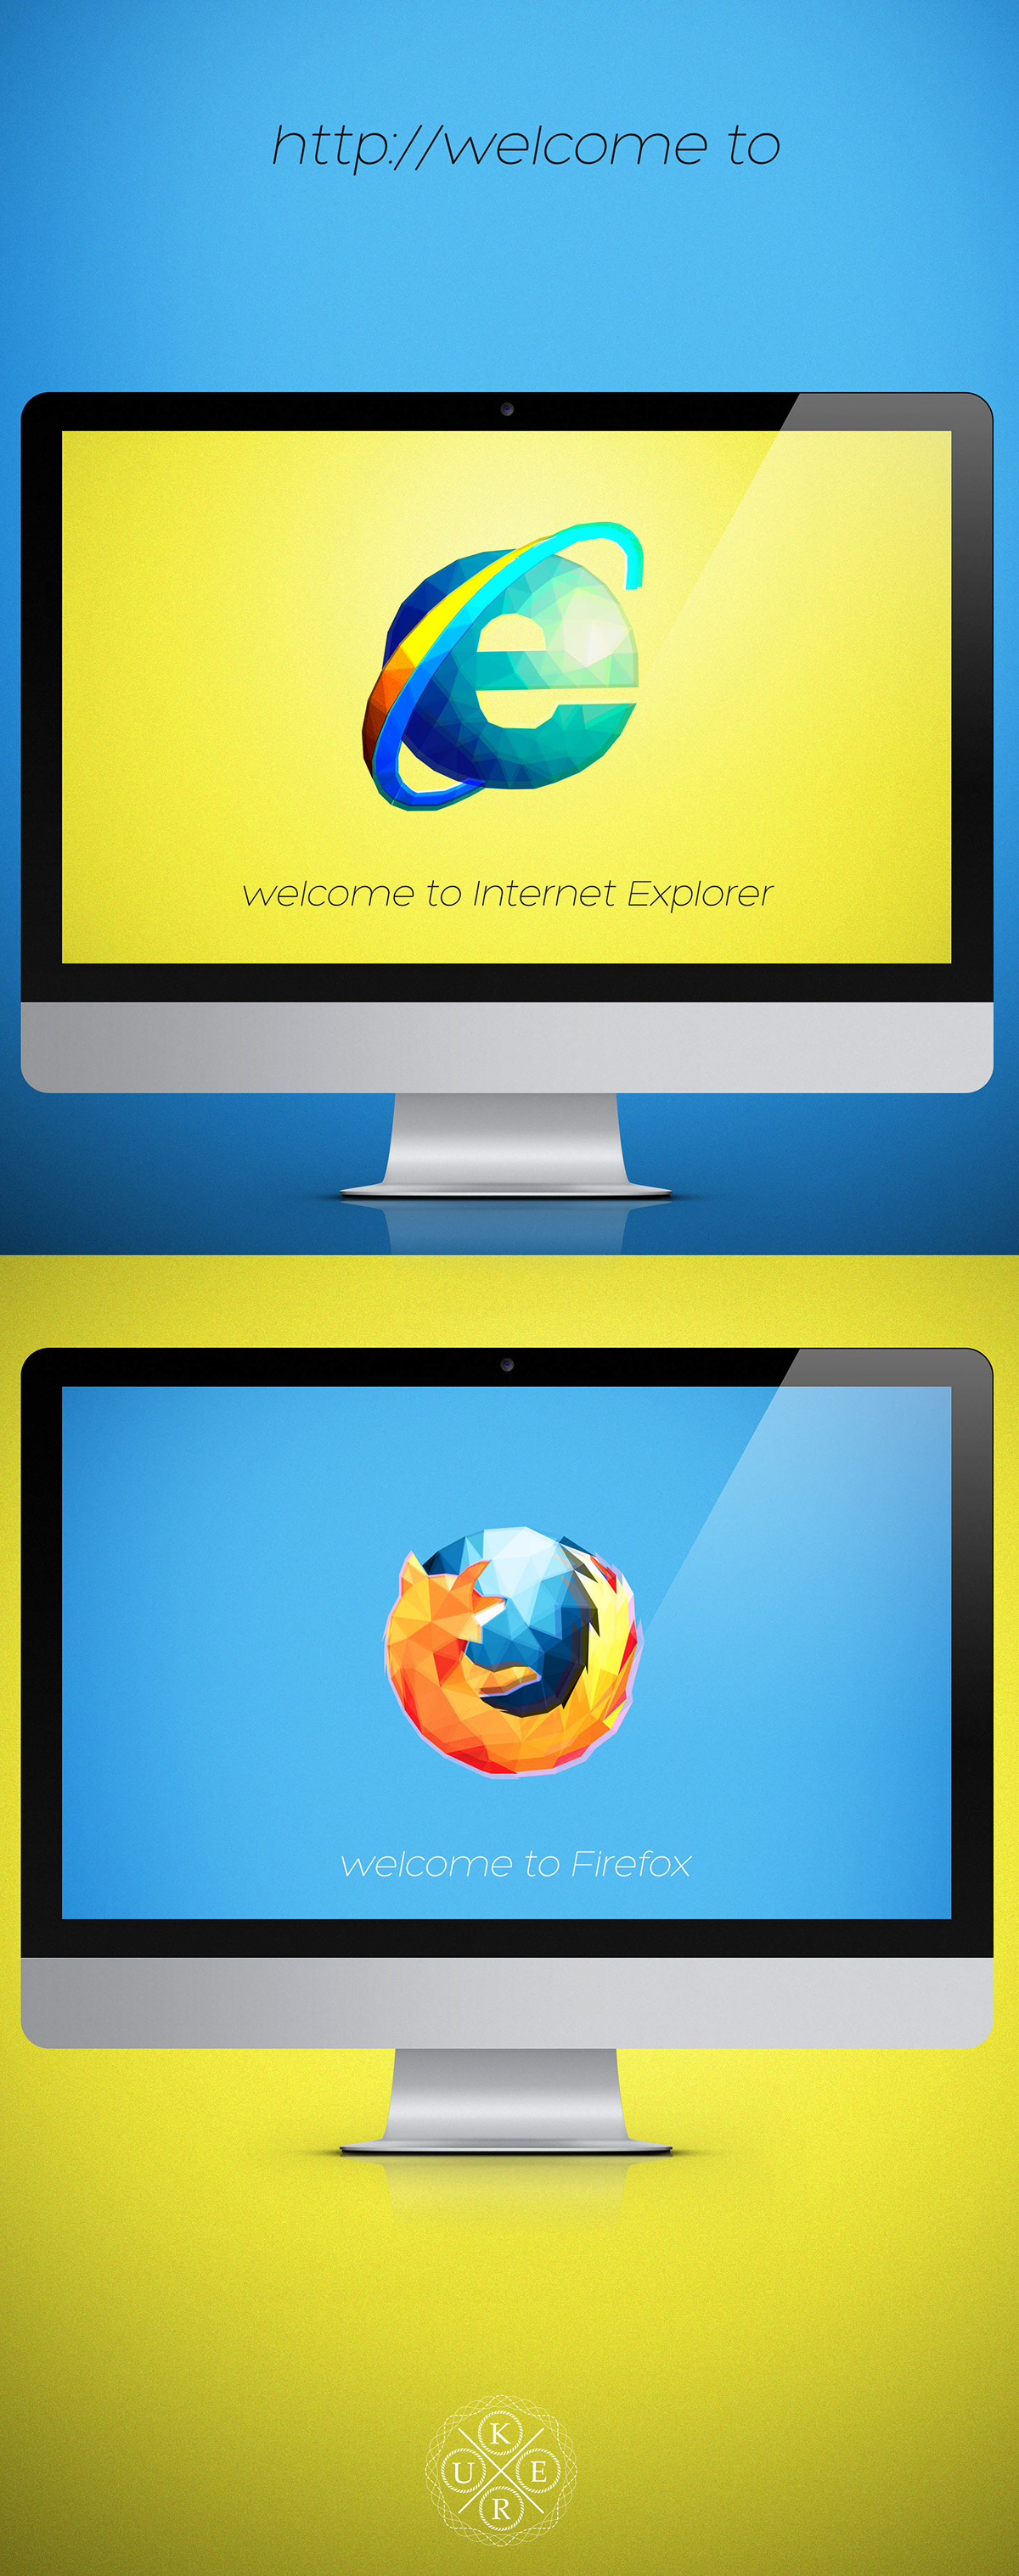 Internet browser chrome firefox opera Internet Explorer